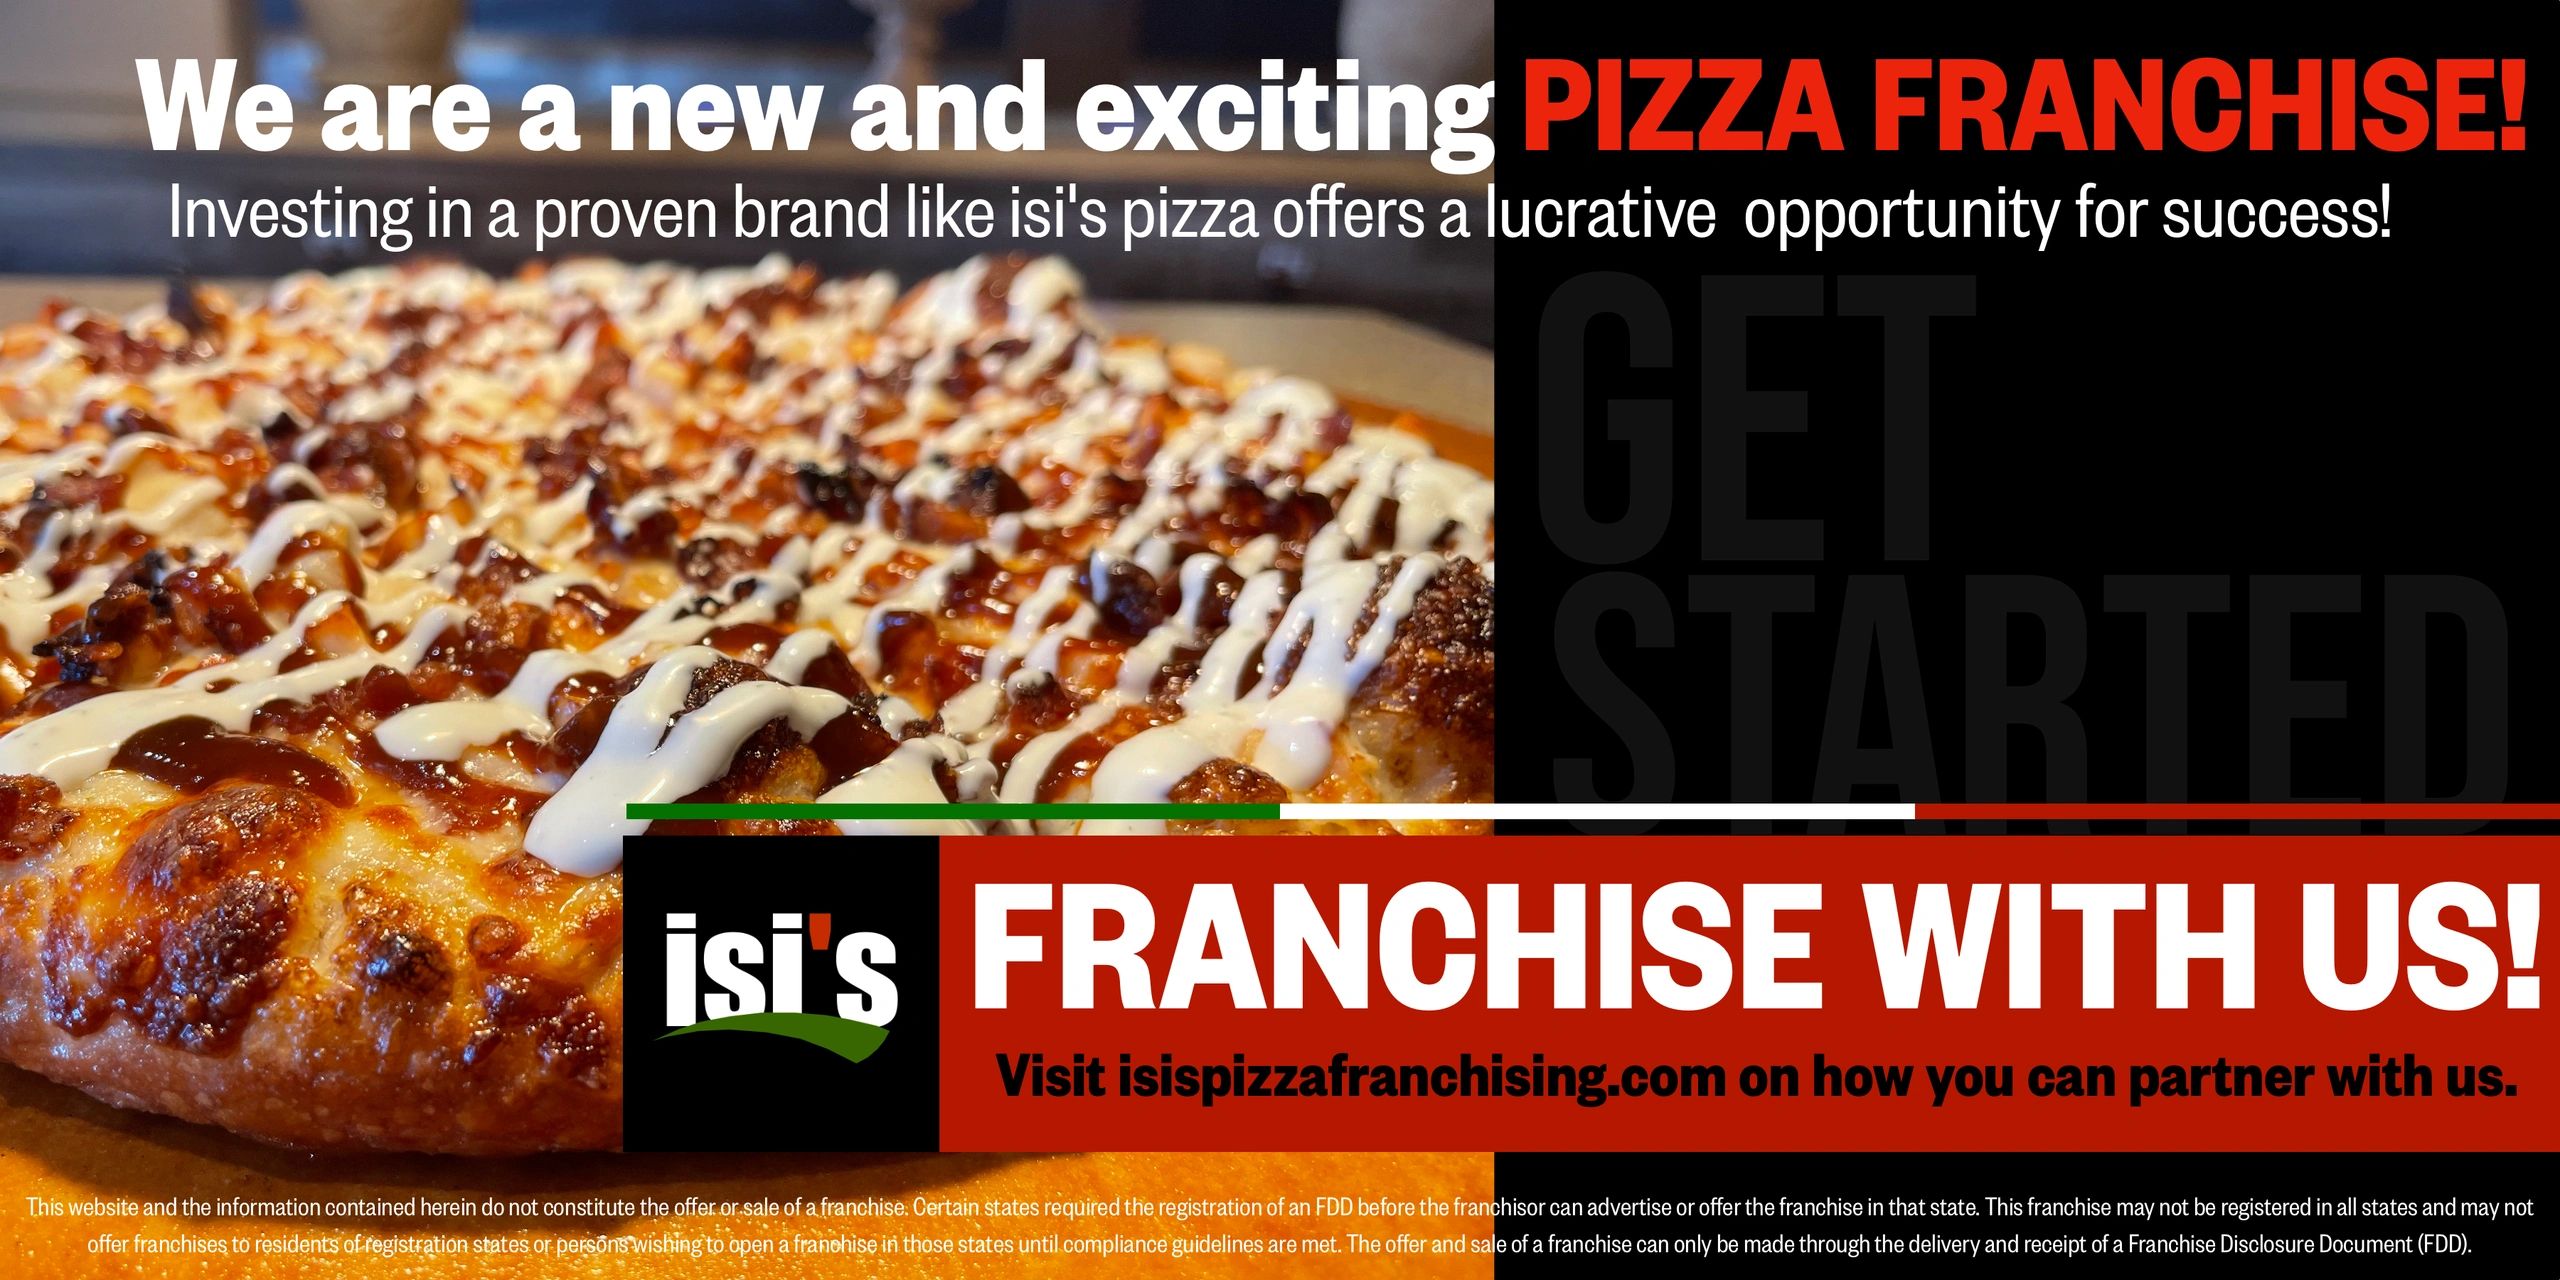 New pizza franchises